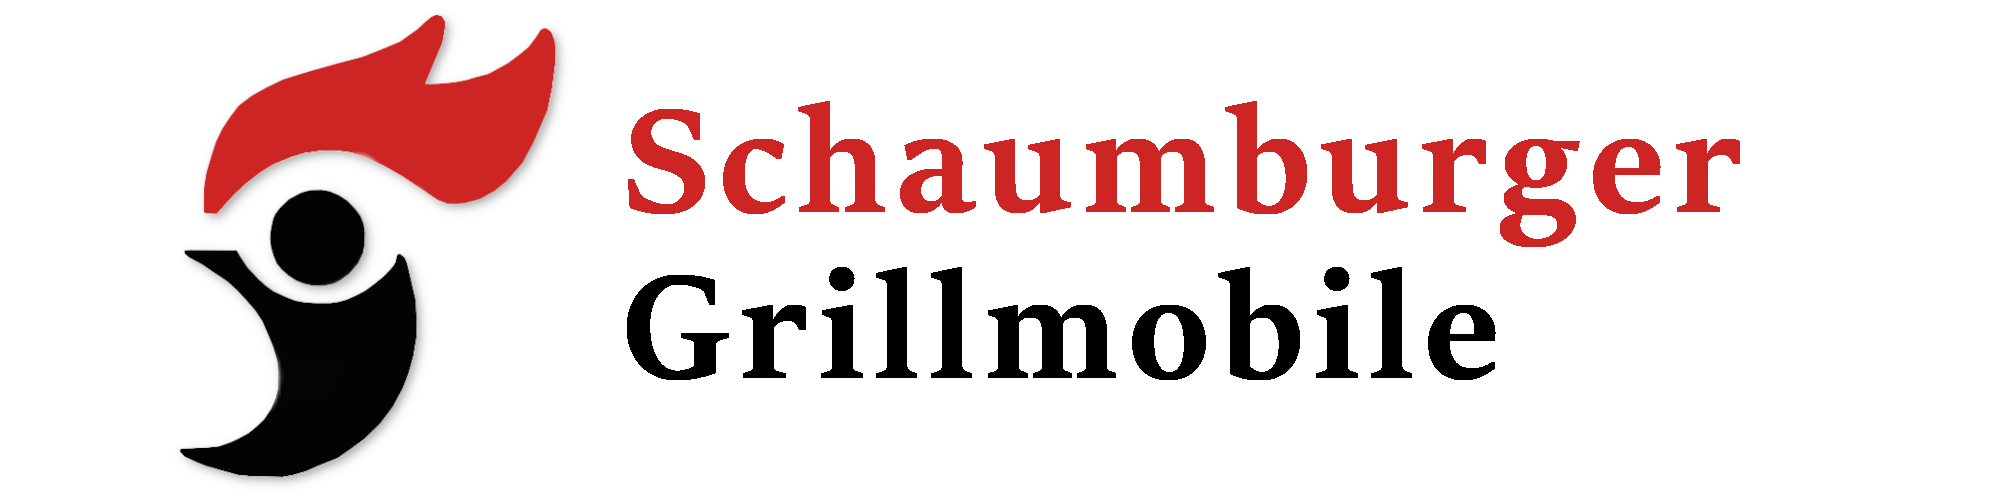 logo schaumburger grillmobile